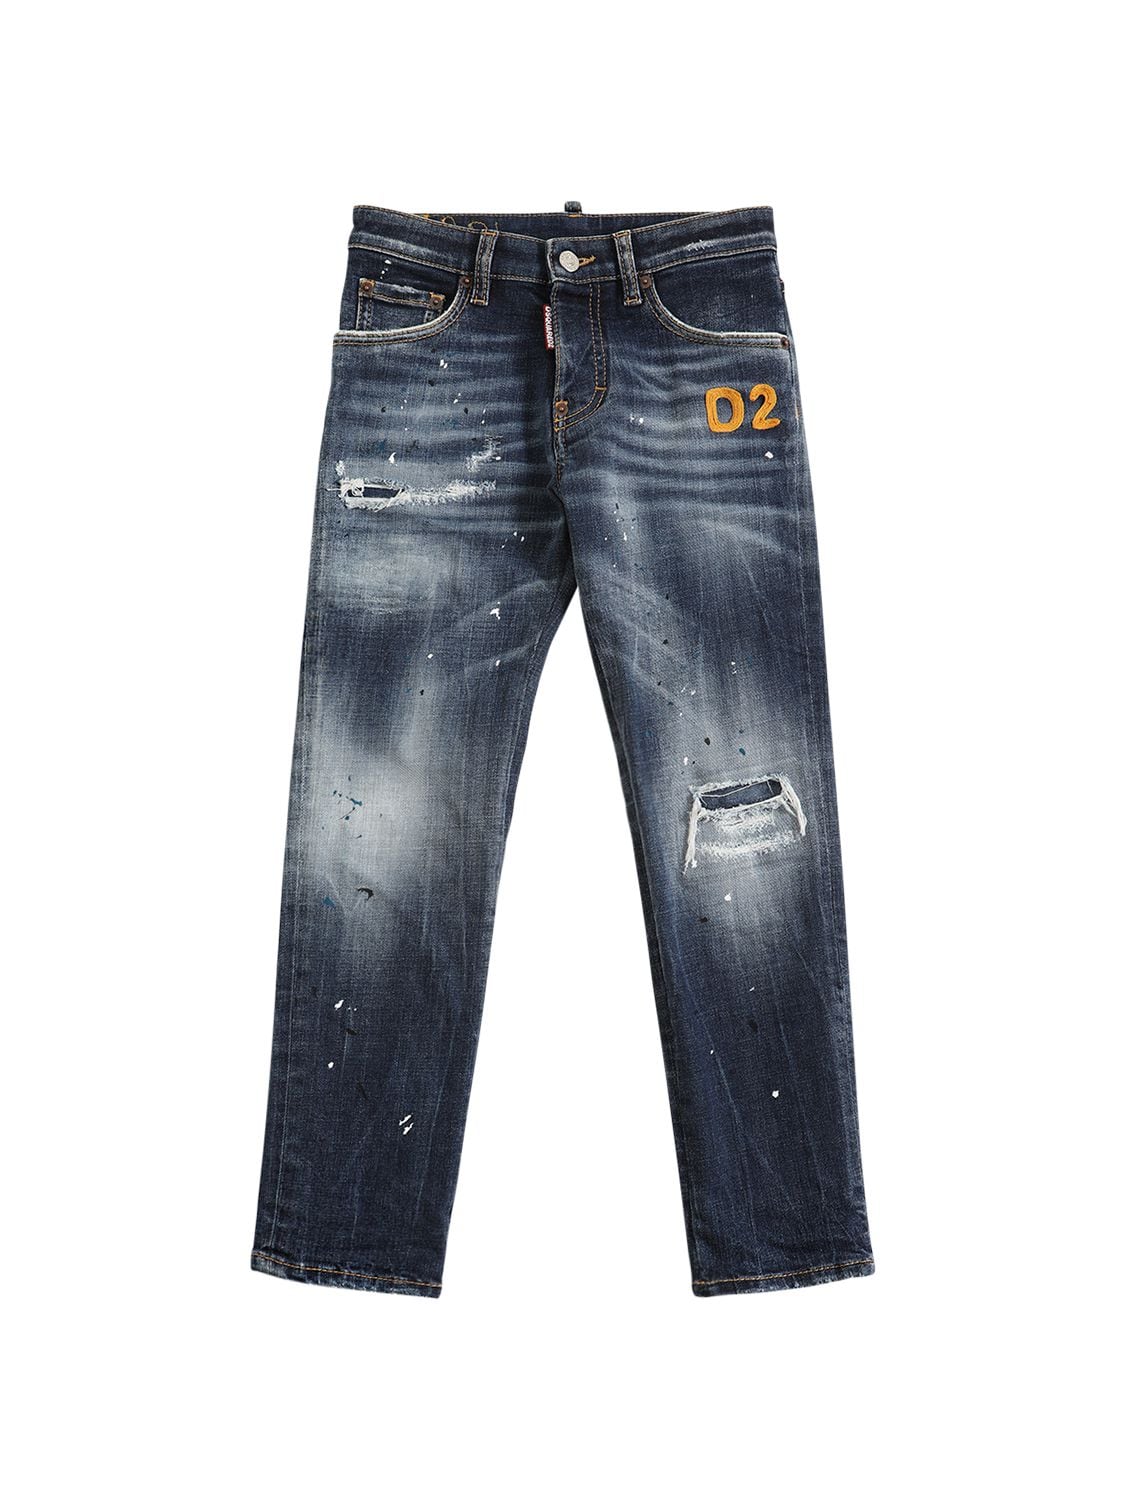 Image of Cotton Denim Distressed Jeans